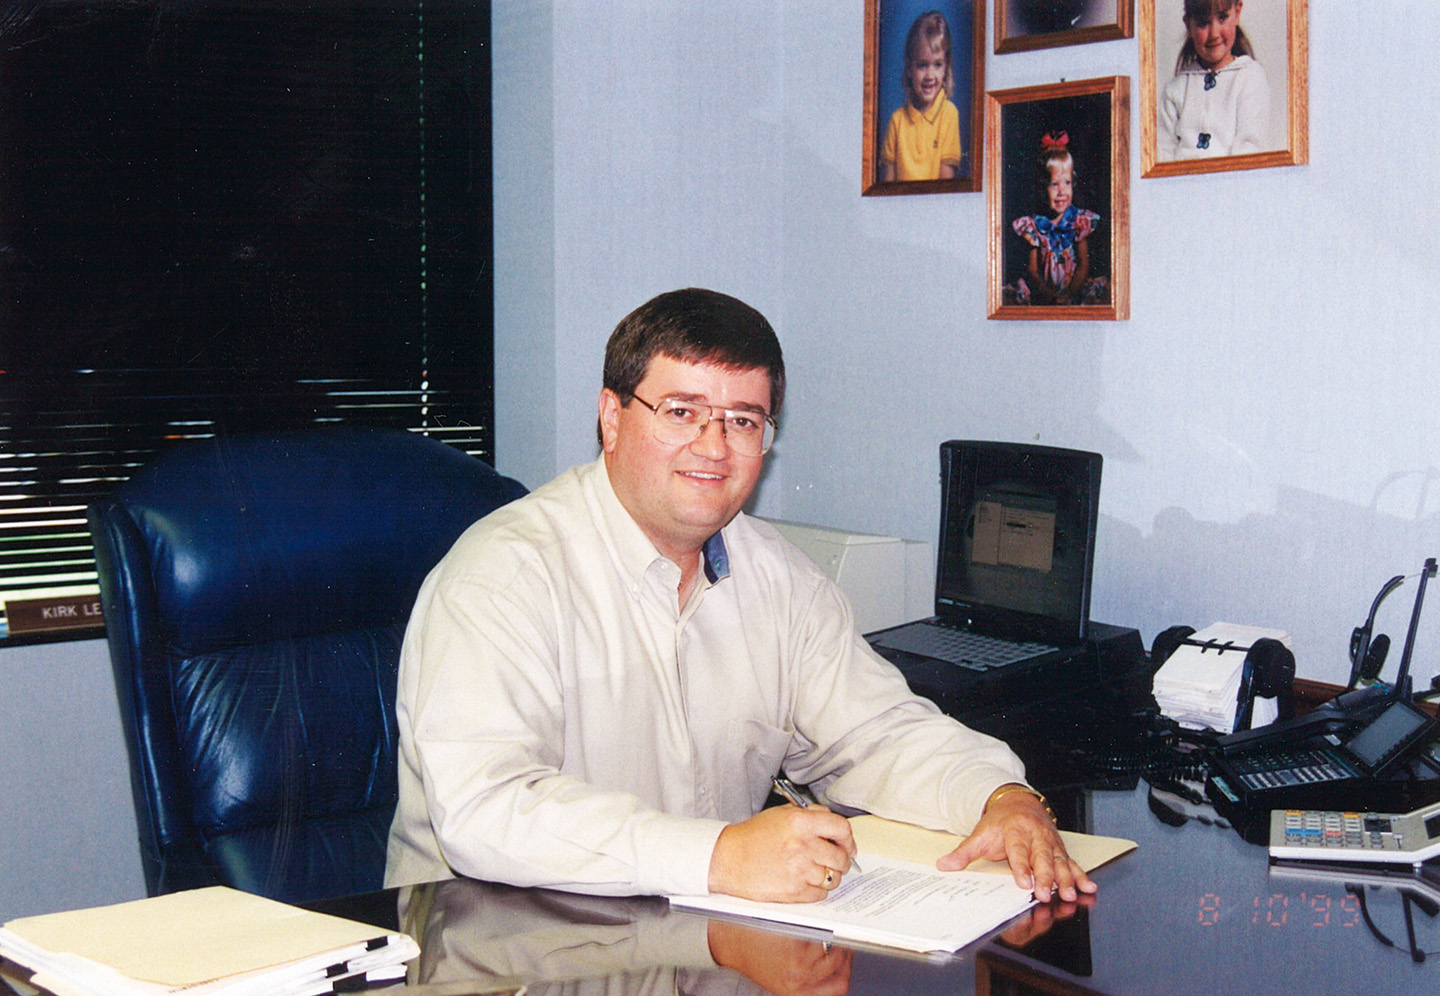 Kirk Leeds at desk in 1999